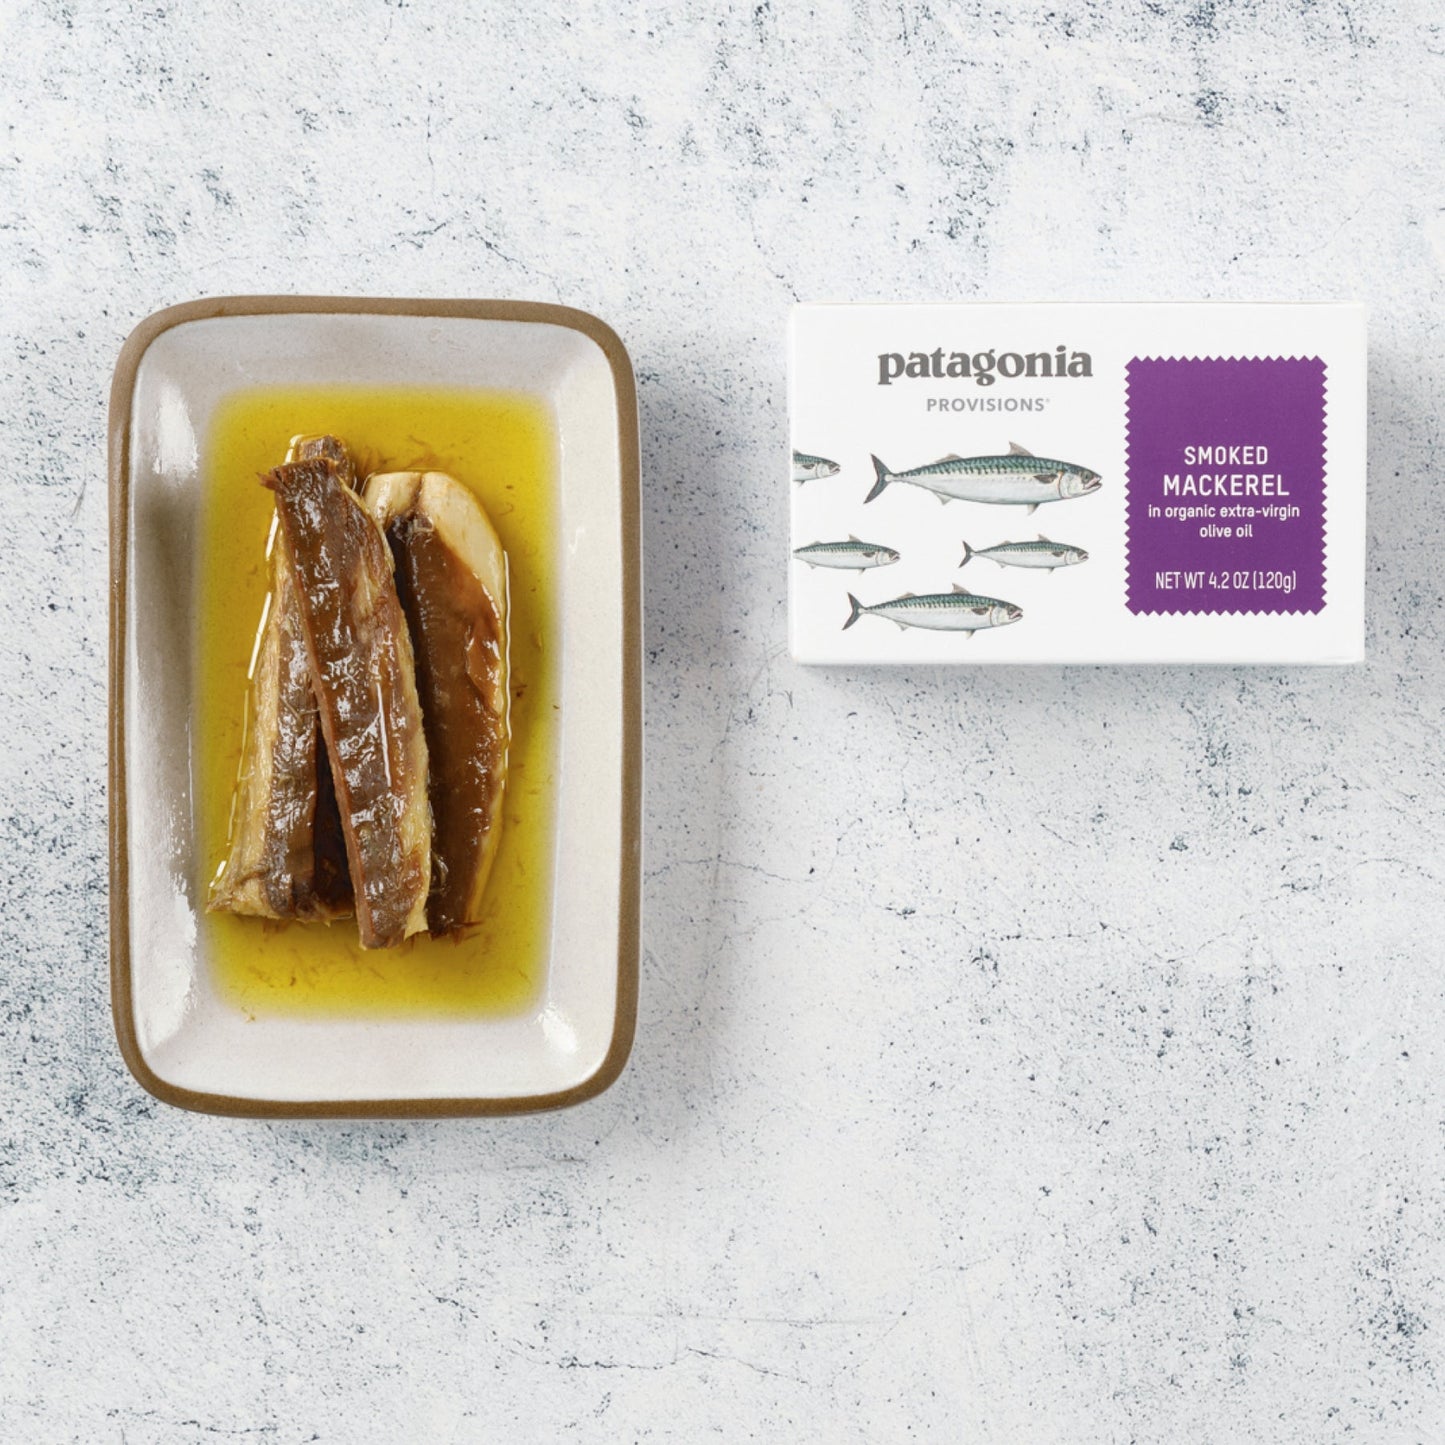 Smoked Mackerel, Patagonia Provisions Spain